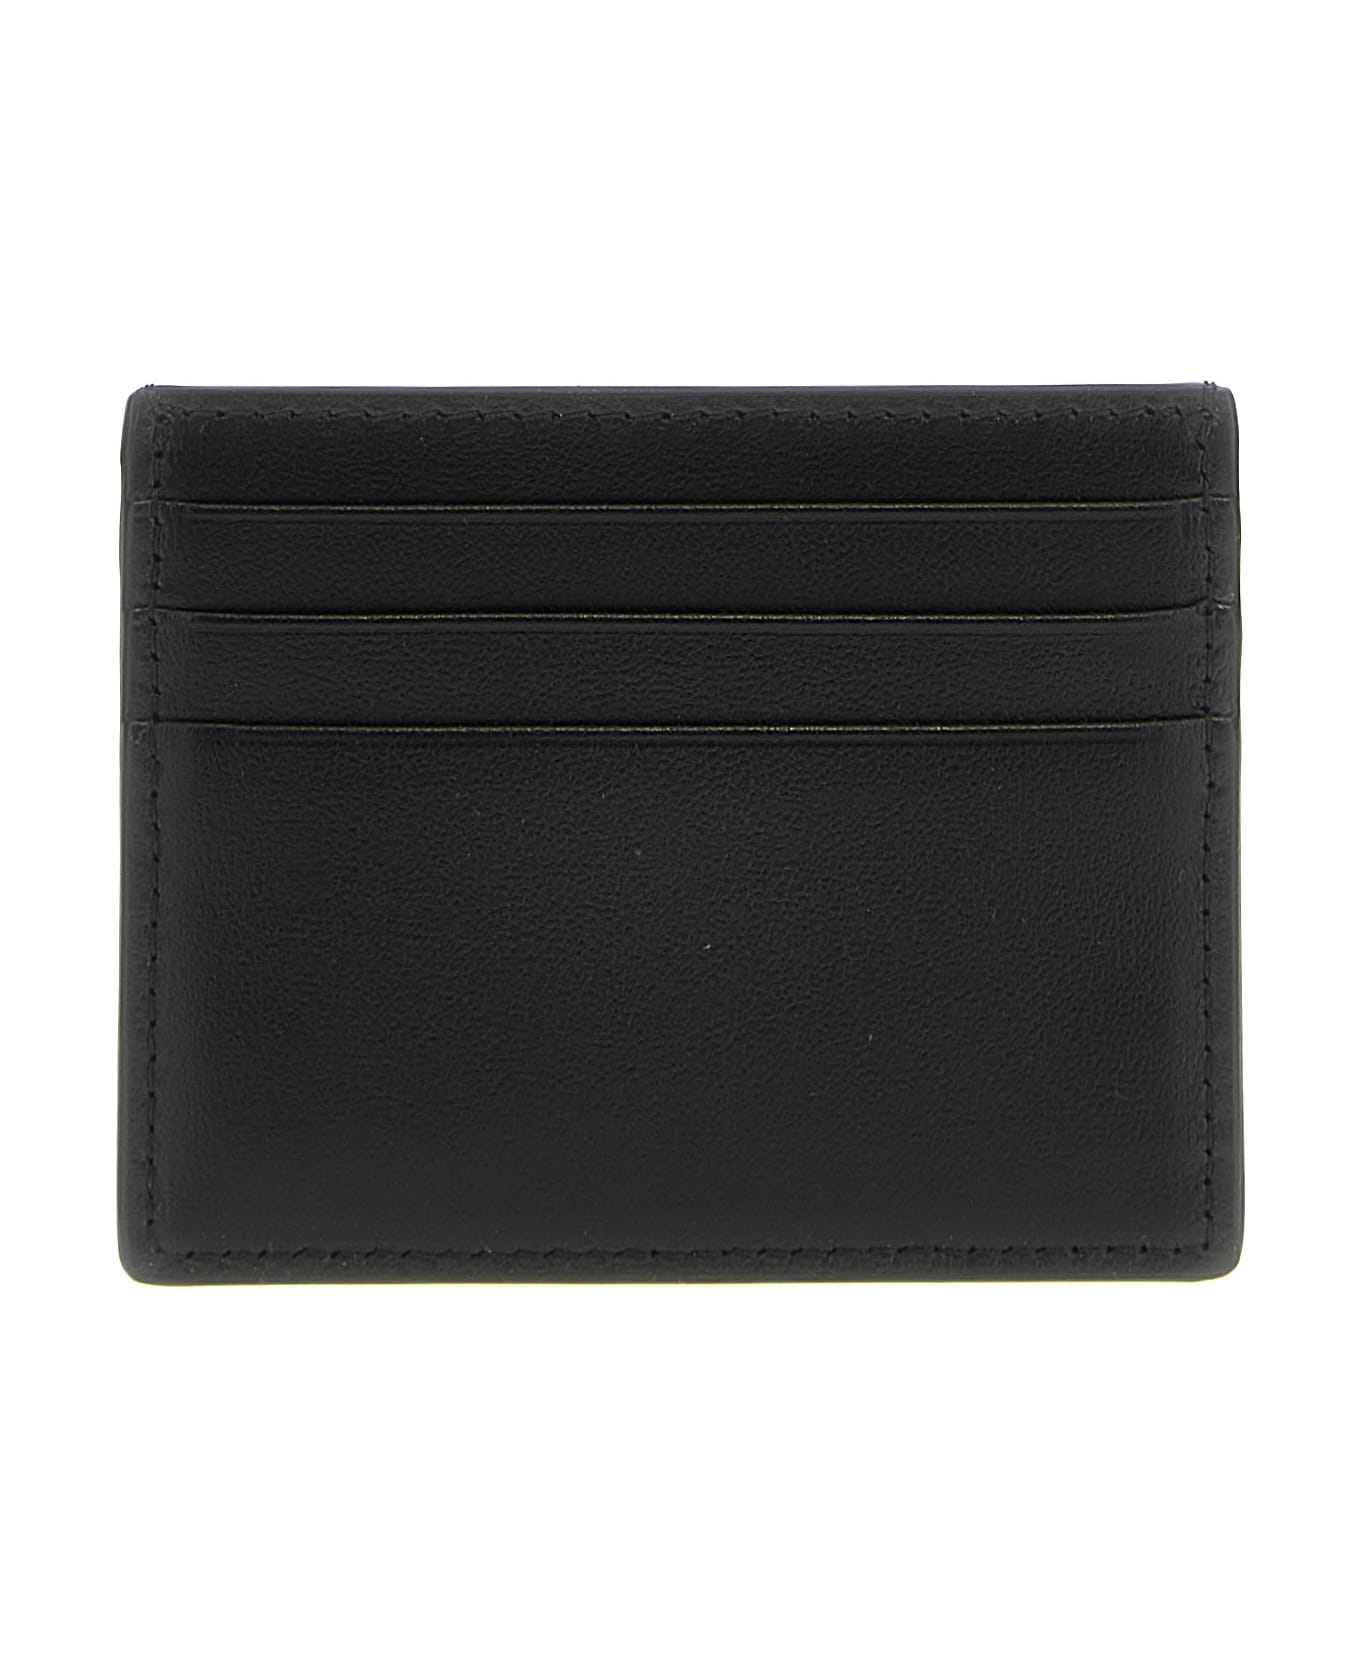 Valentino Garavani Black Vlogo Card Holder - Black 財布